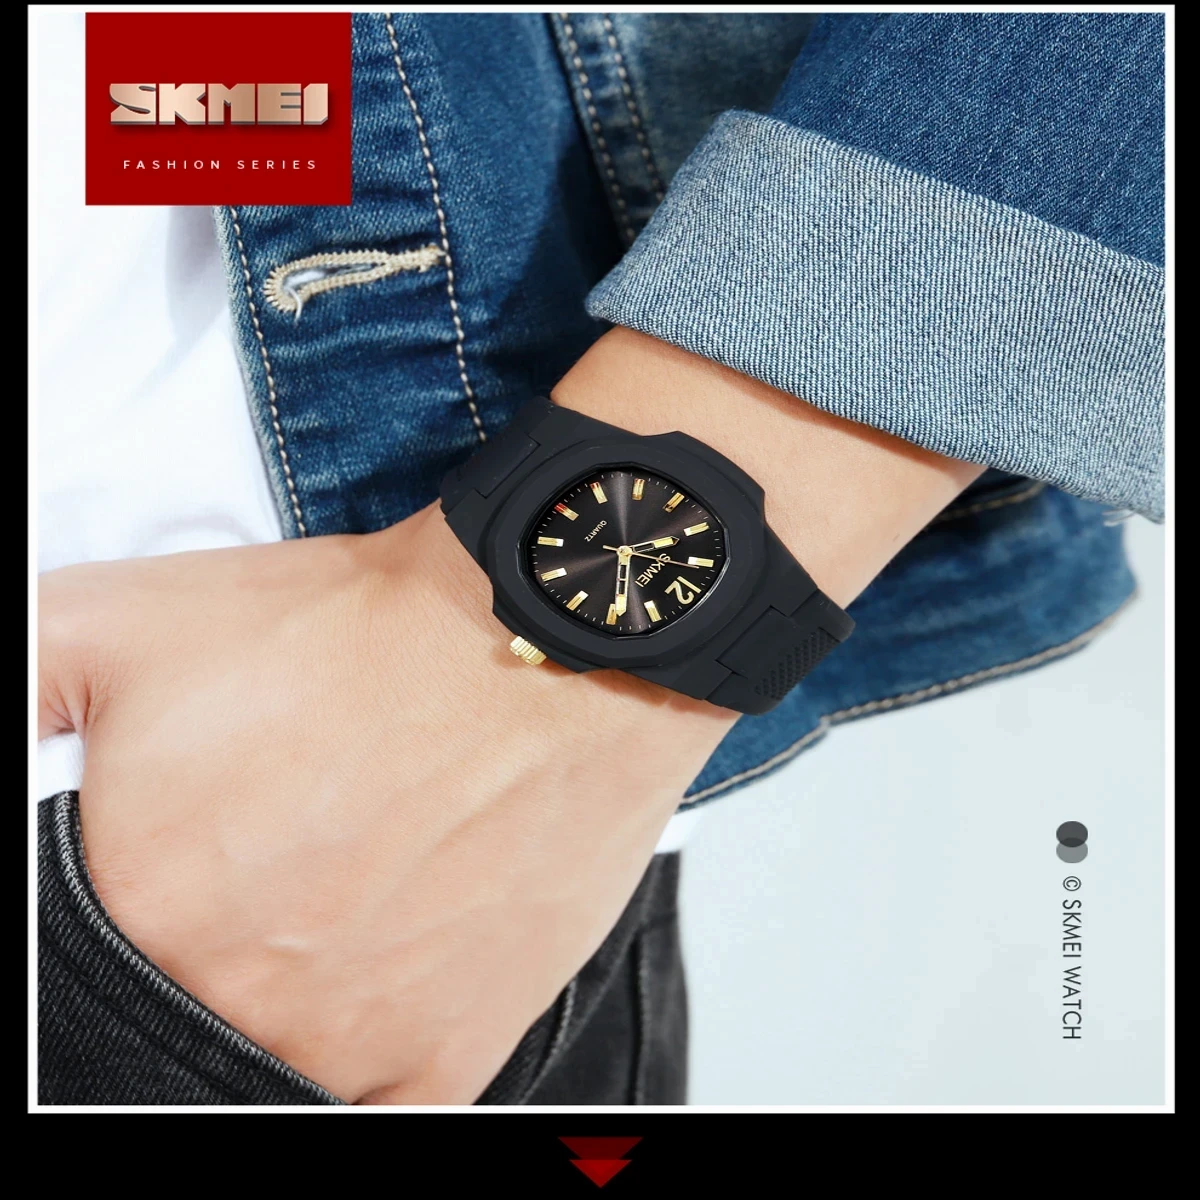 SKMEI Model 1717 Watch Retro Silicone Band Casual Analog Quartz Model 1717 skmei Colour black & golden dial